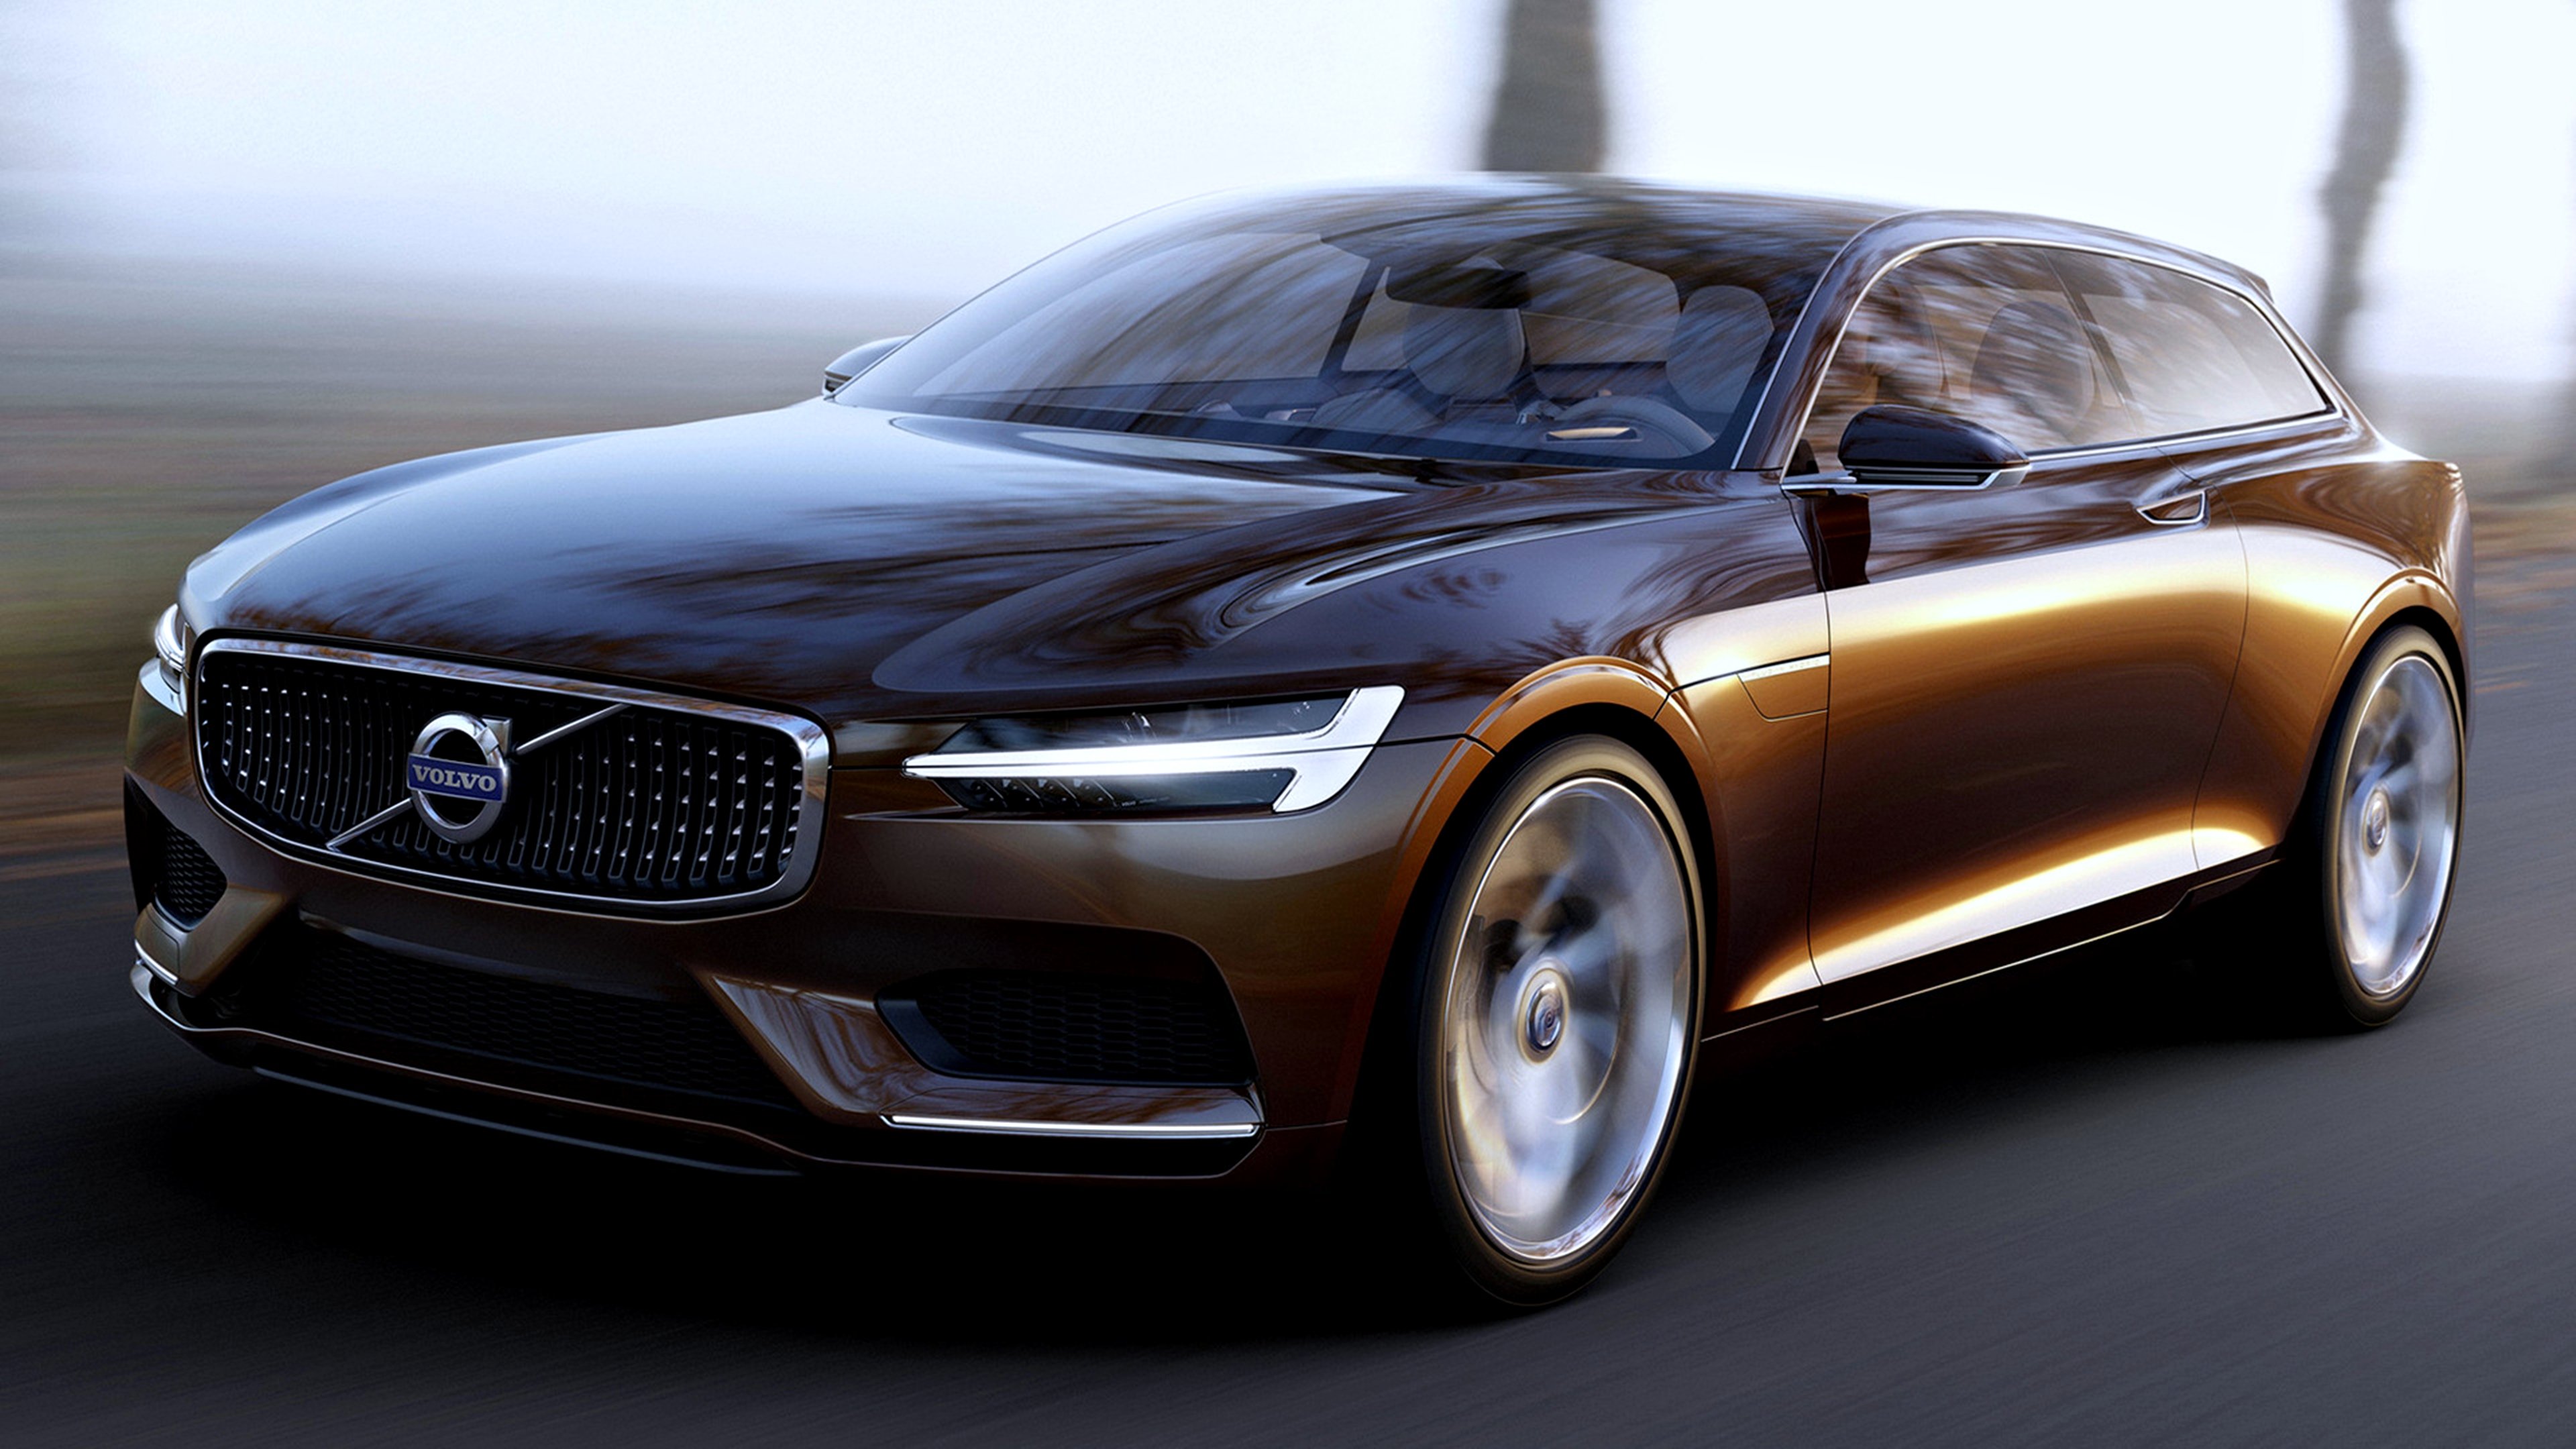 2014, Volvo, Concept, Estate, Brown, Road, Cars, Speed, Motors Wallpaper